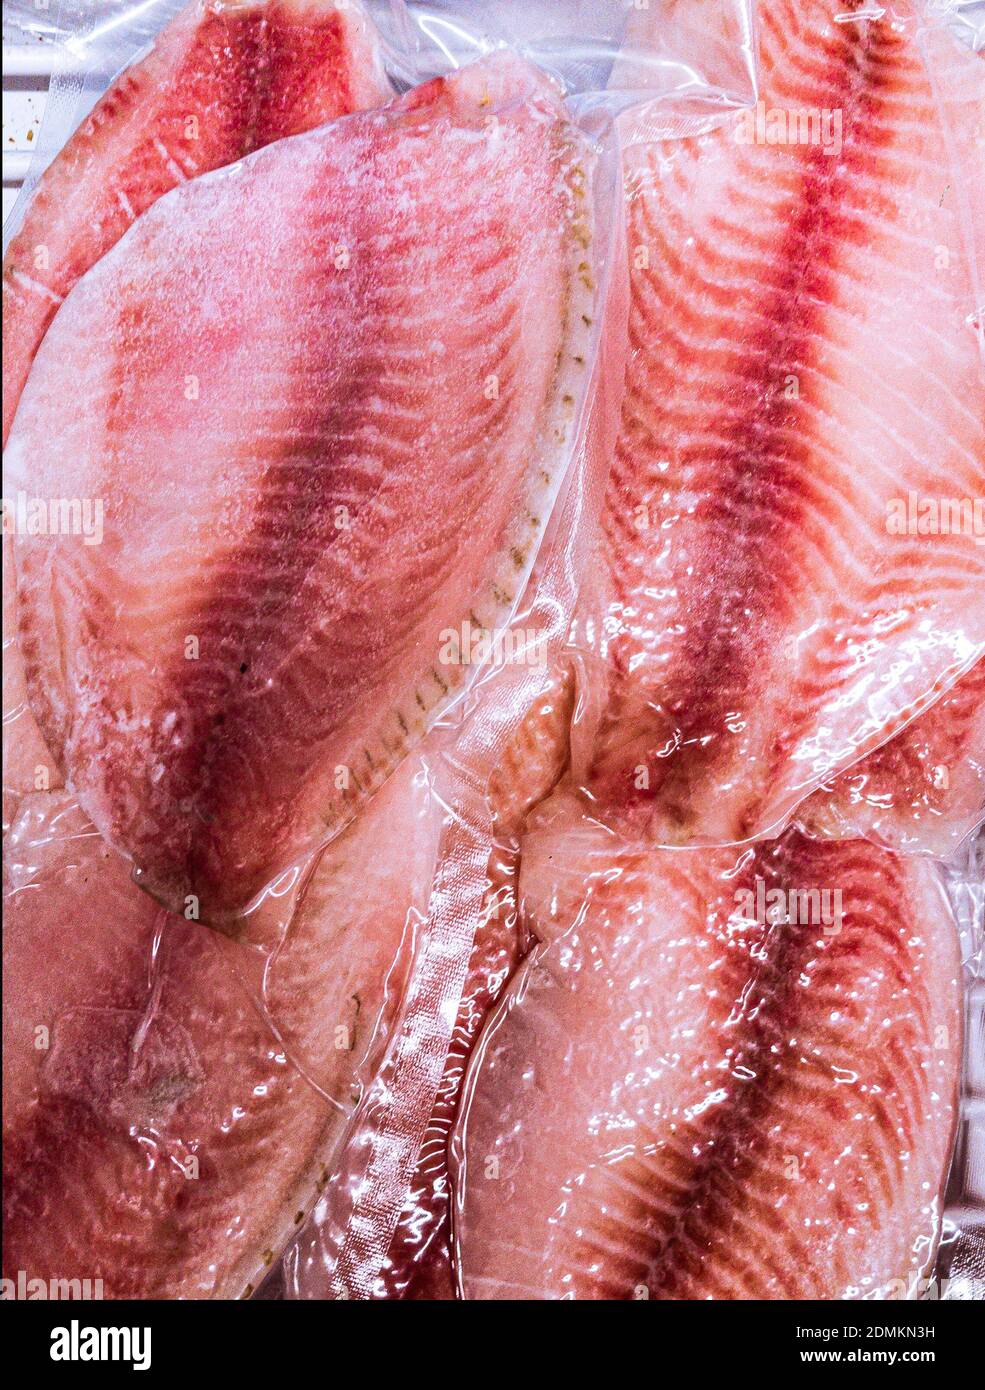 frozen vacuum packed fish fillet Stock Photo